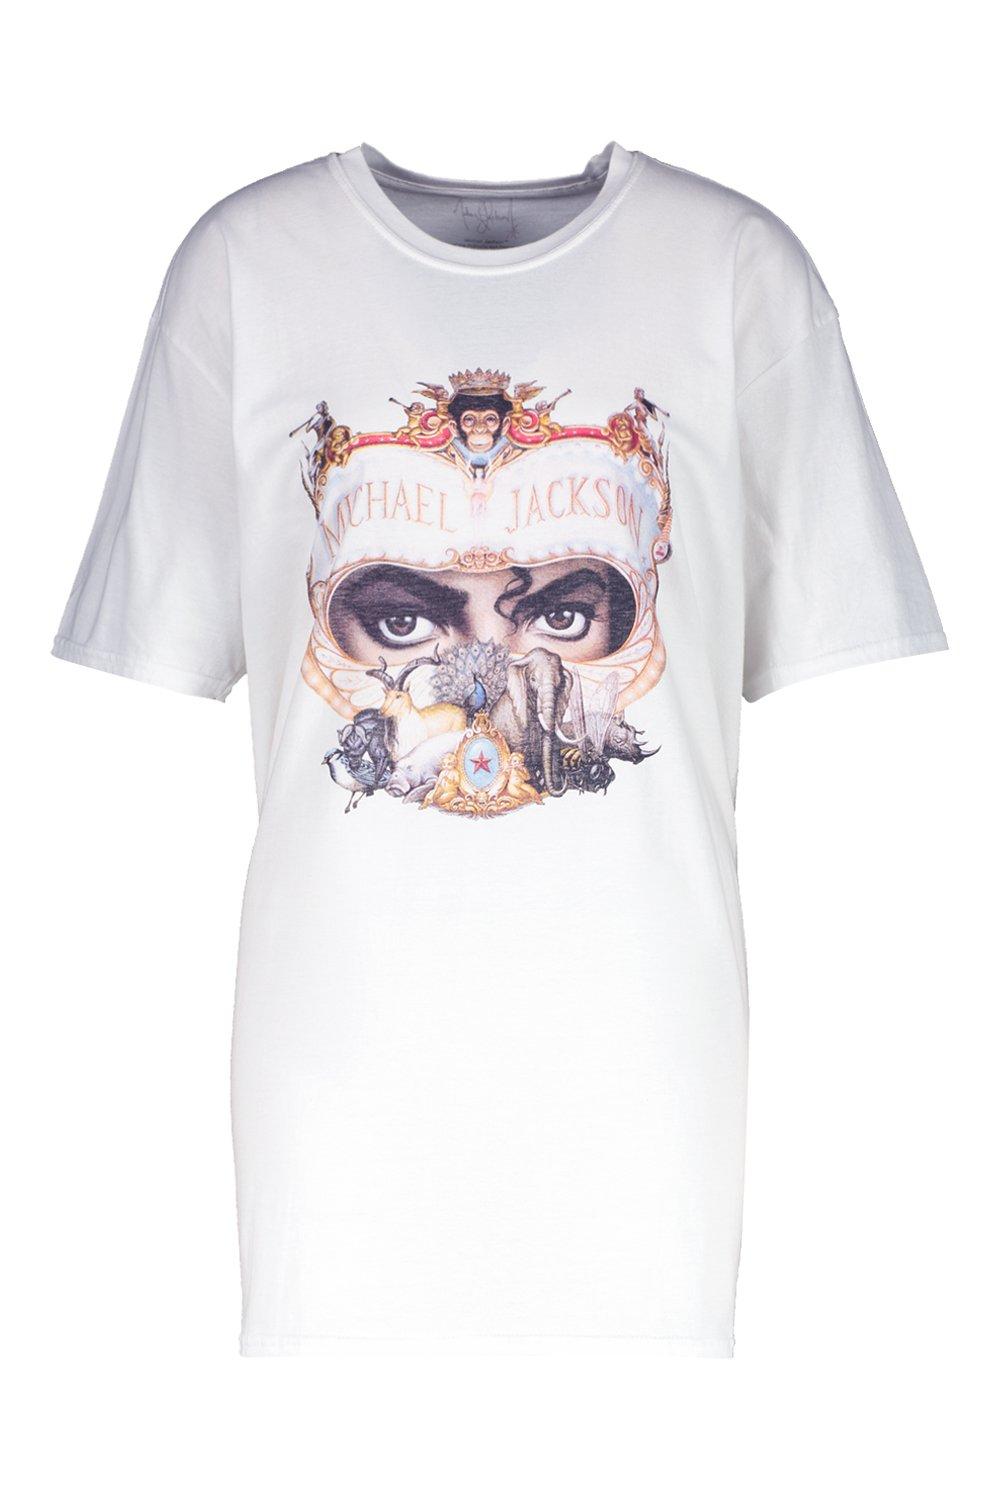 Michael Jackson Dangerous Poster Women's T-Shirt by Florian